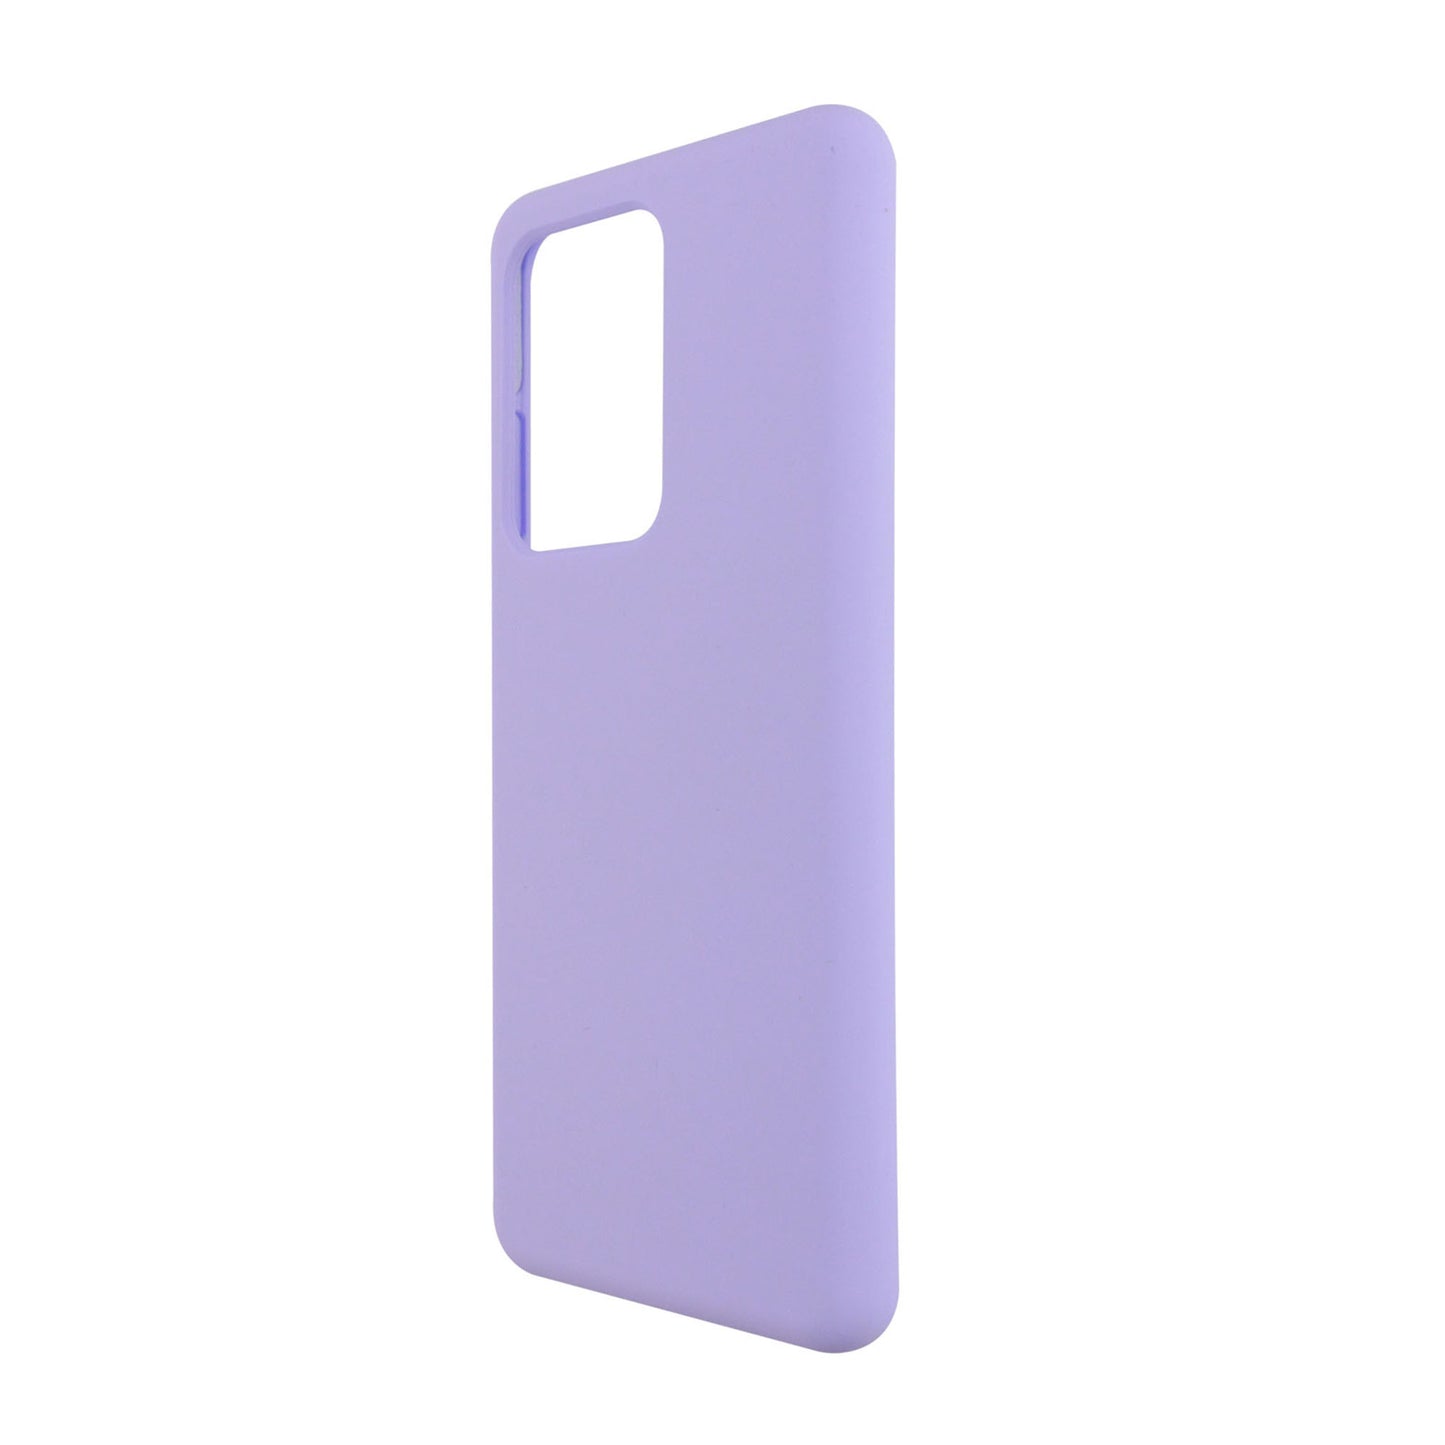 Samsung Galaxy S20 Ultra 5G Uunique Purple (Lavender) Liquid Silicone Case - 15-06635